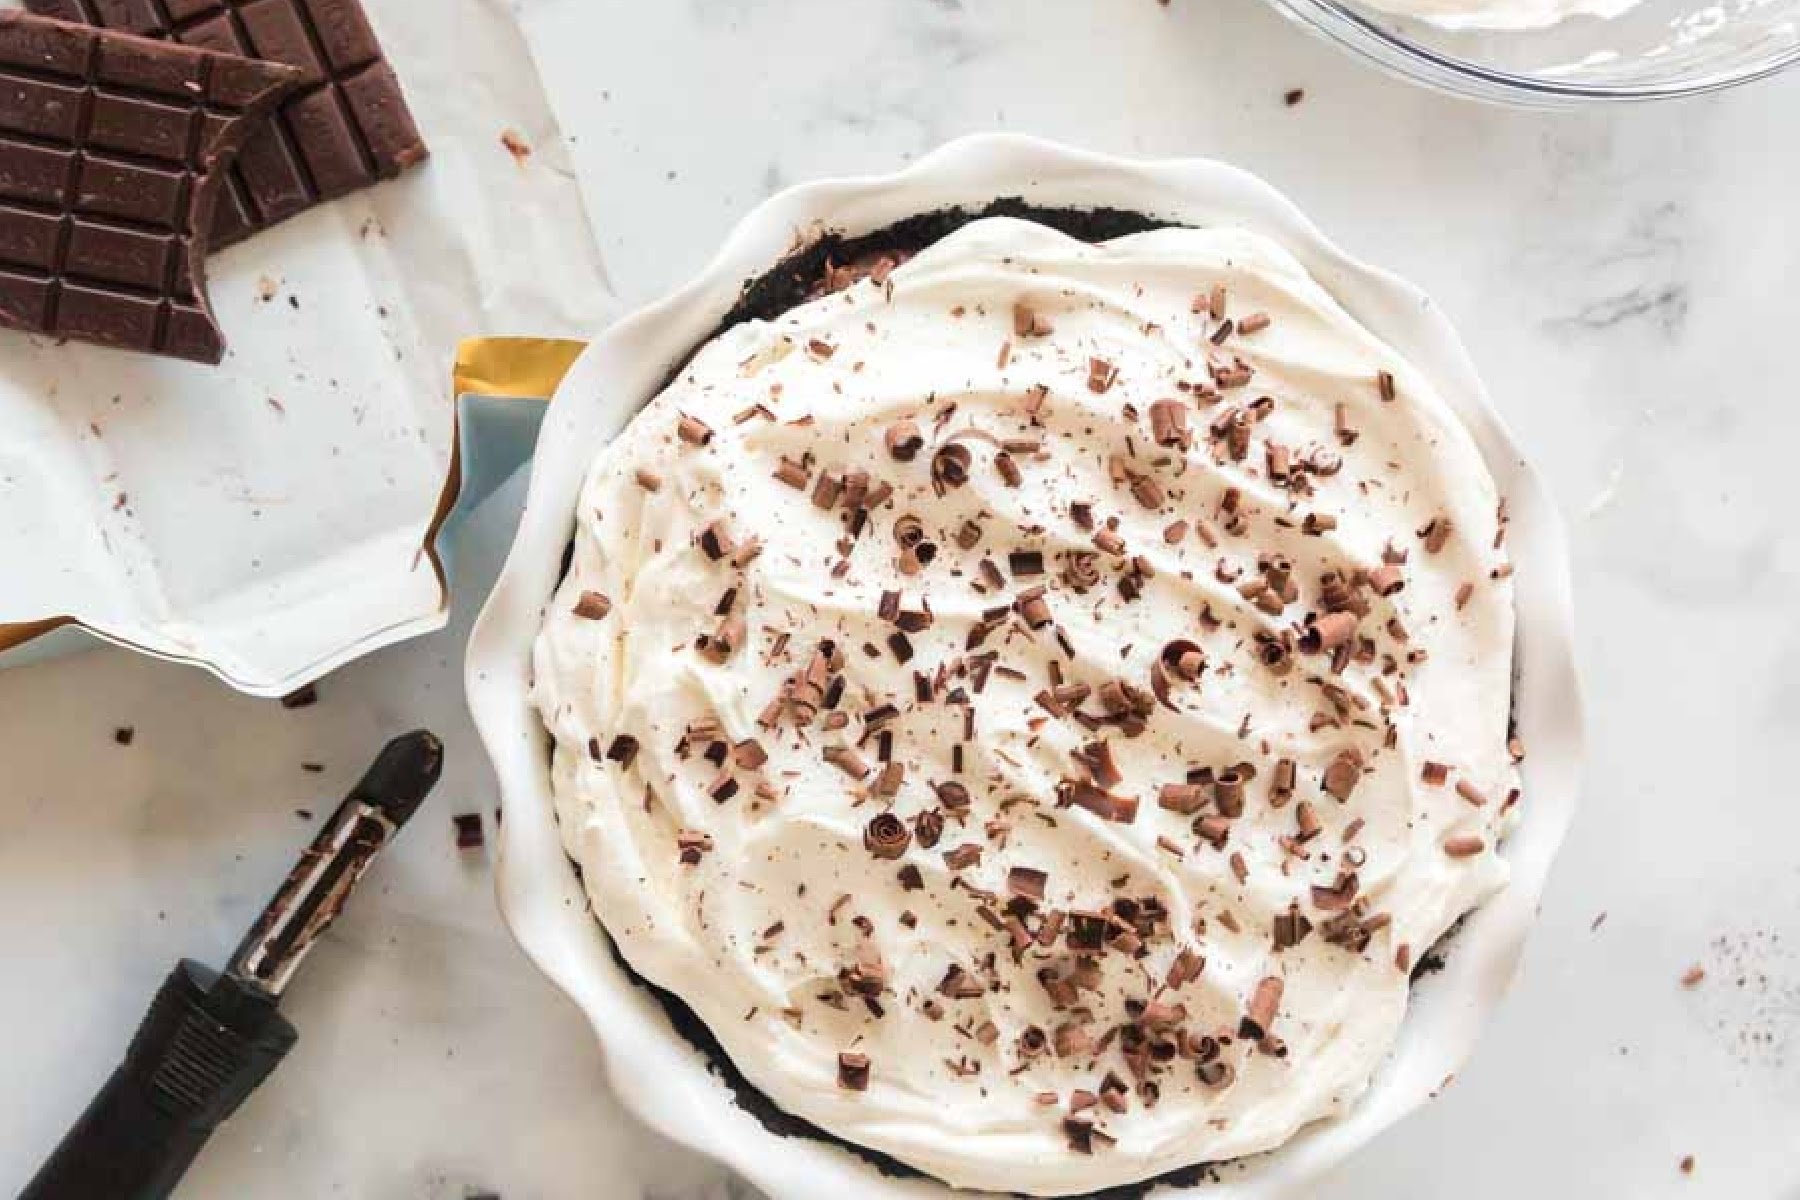 Chocolate bar, peeler, and chocolate curls over the top of chocolate cream pie.